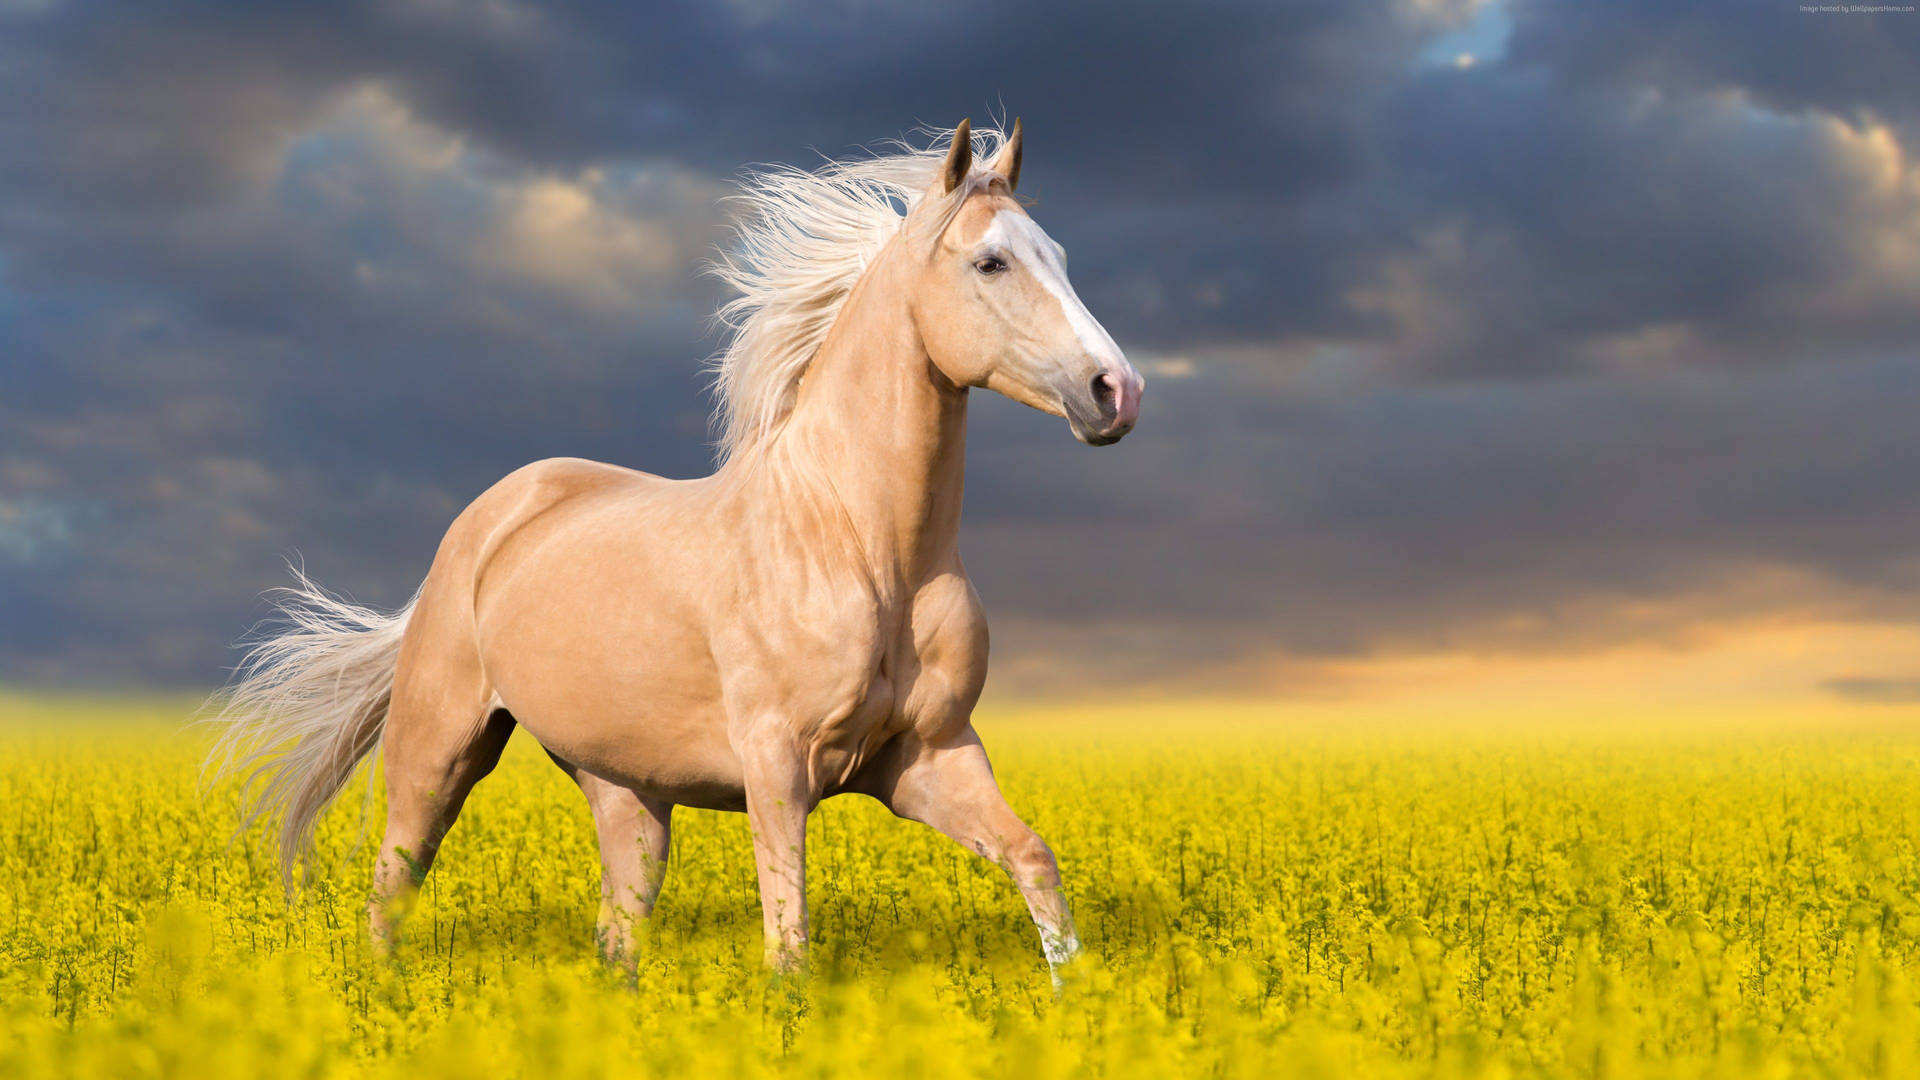 Cute Horse In The Meadow Wallpaper